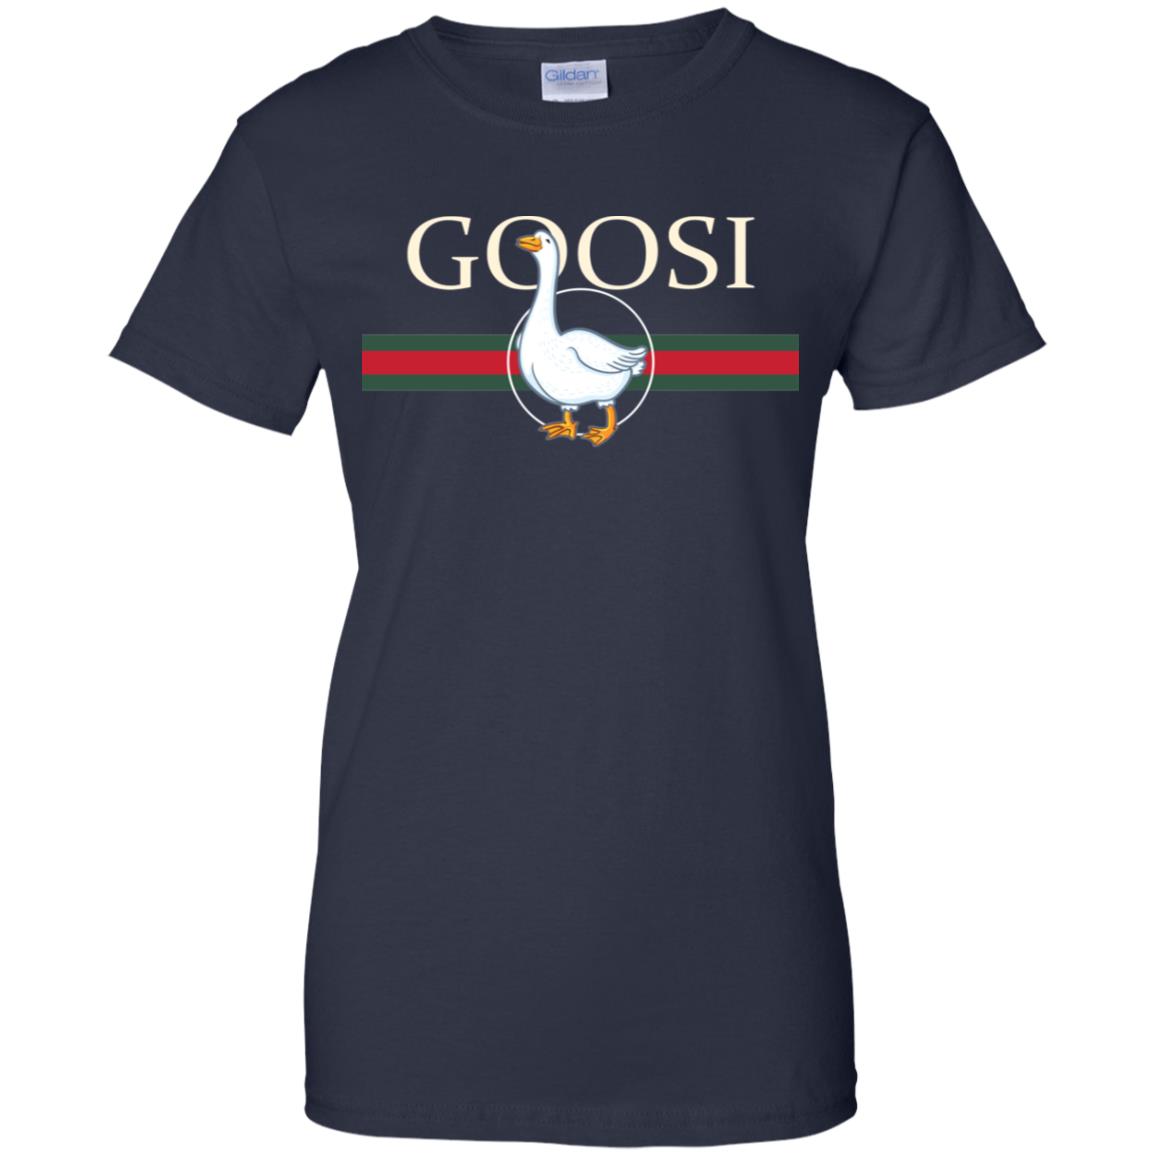 goosi t shirt